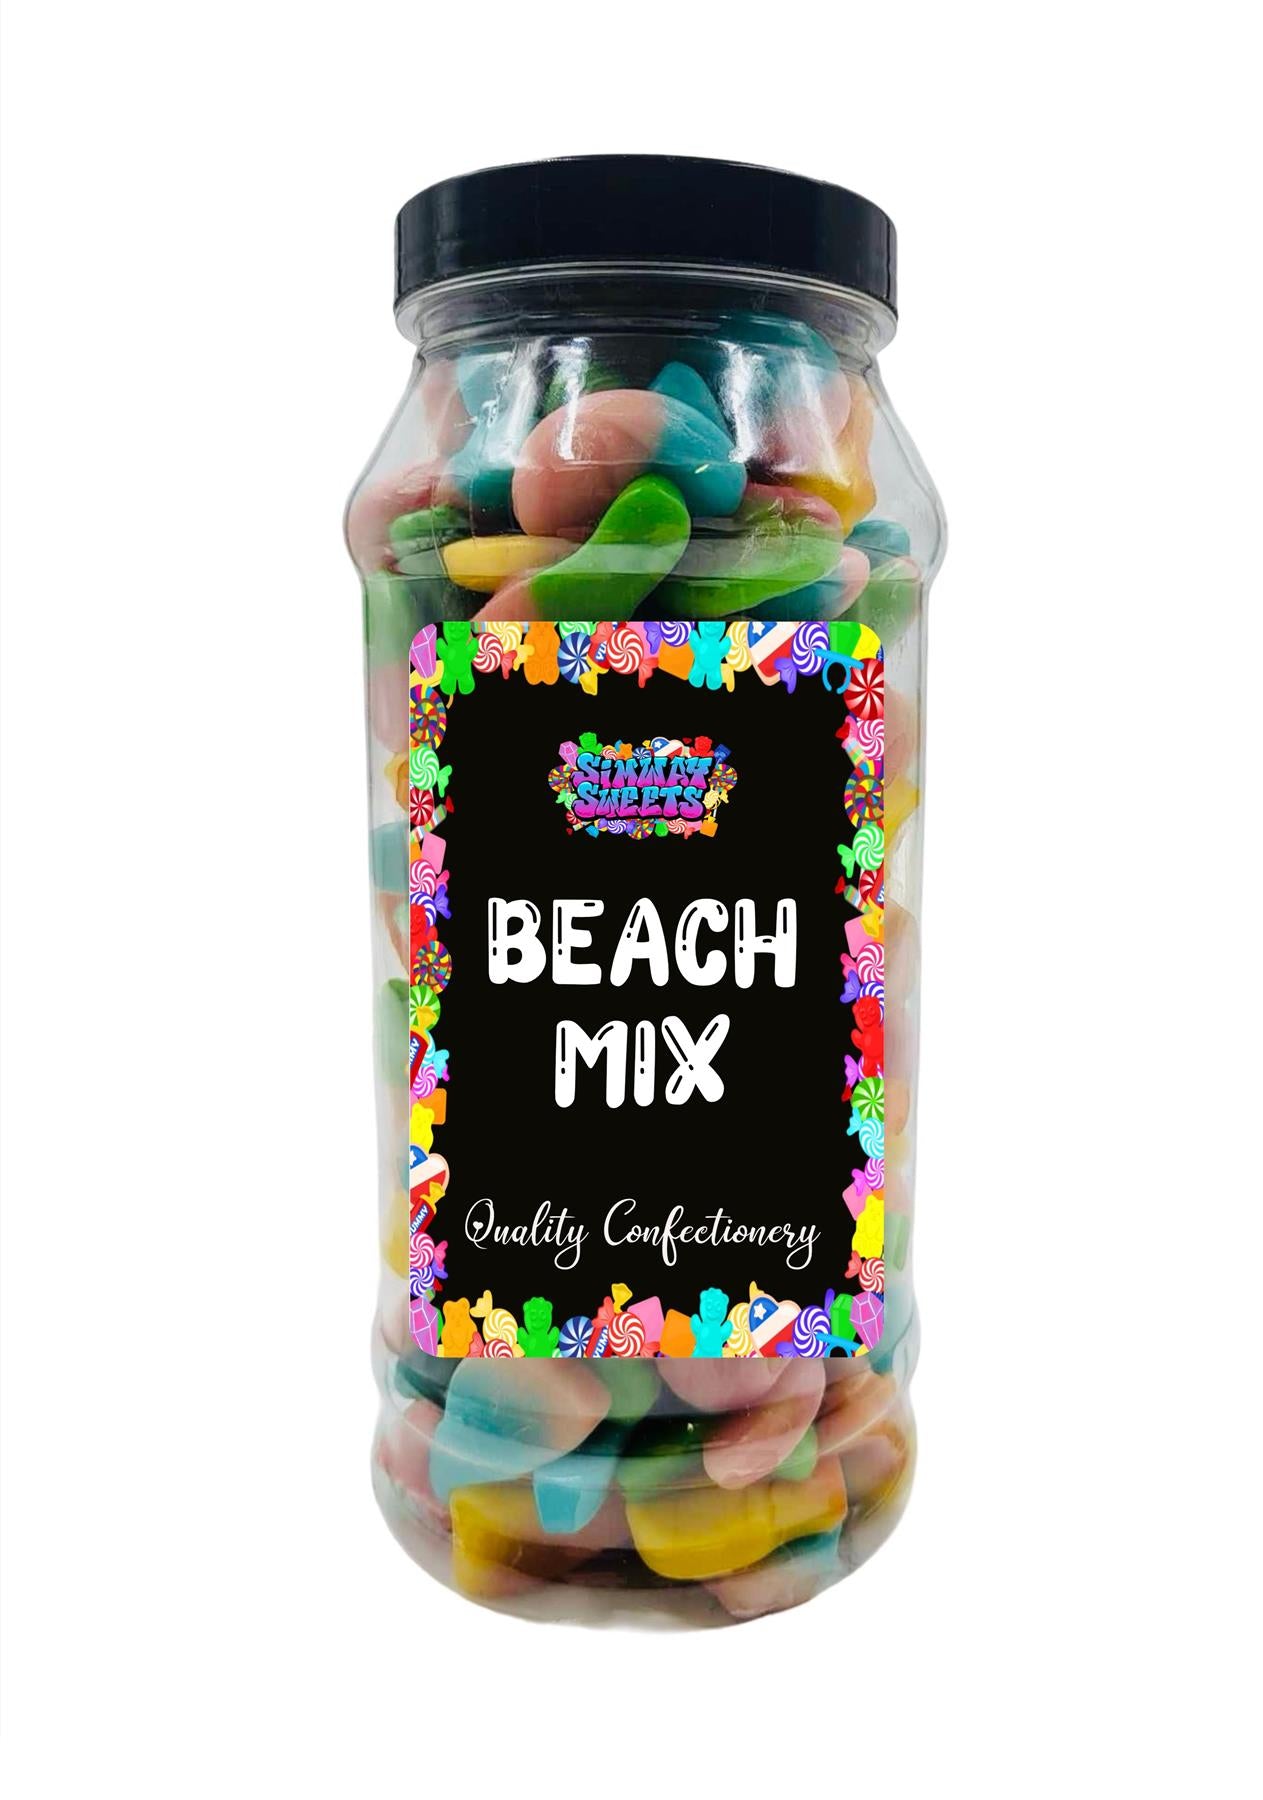 Beach Mix Jelly Gummy Retro Sweets Gift Jar - 735g